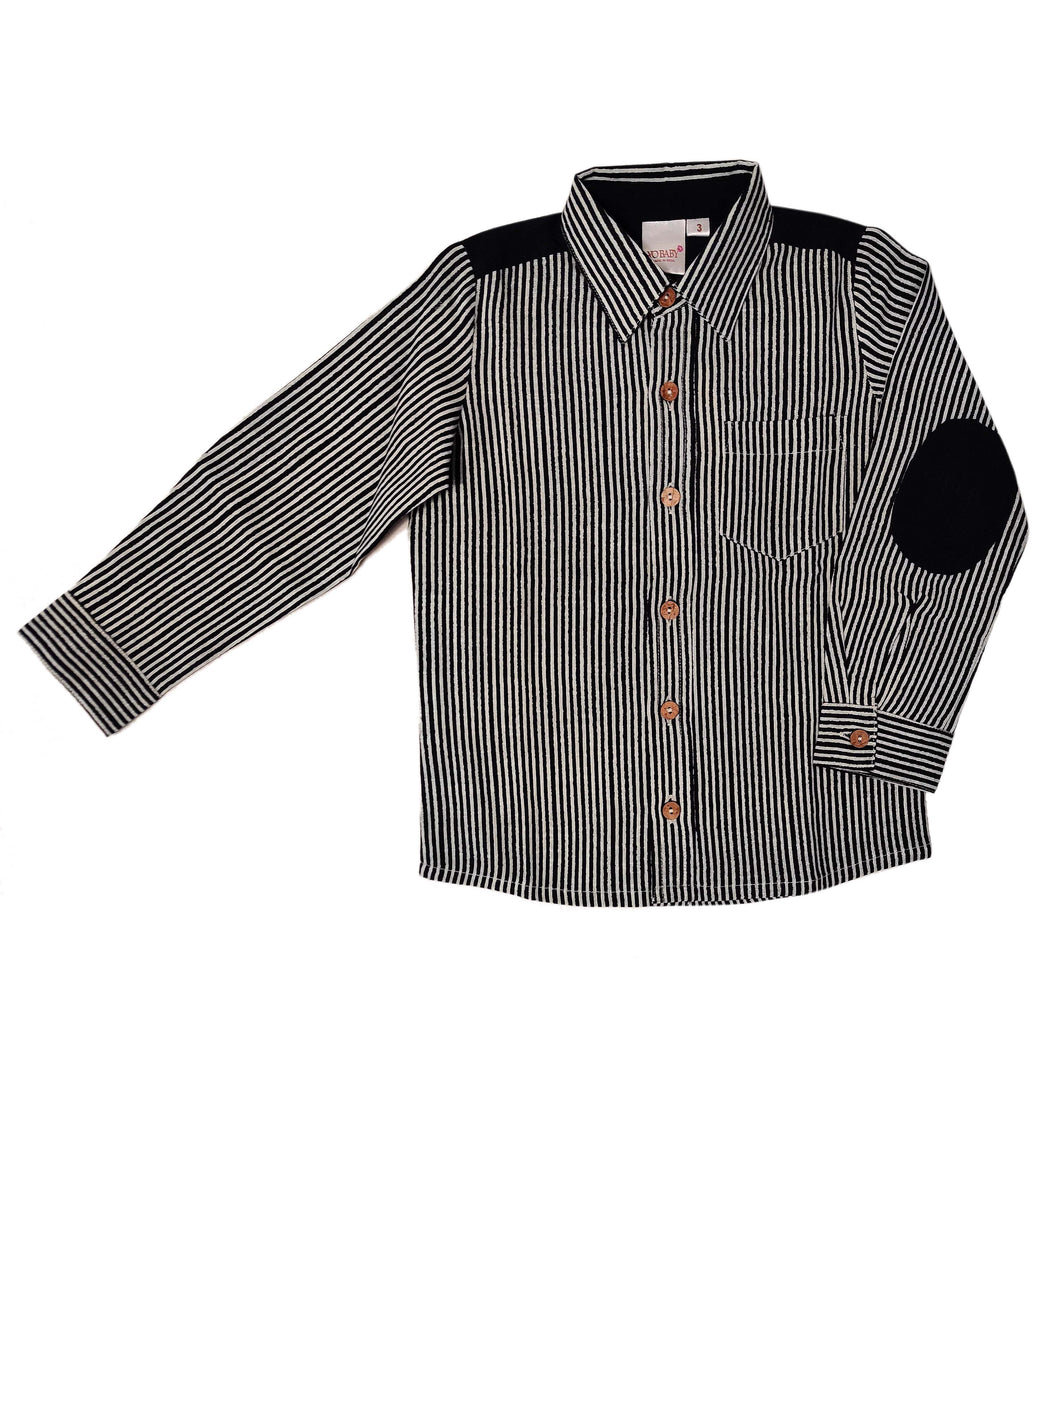 Patch Shirt - Striped Navy YB1961 YOBABY